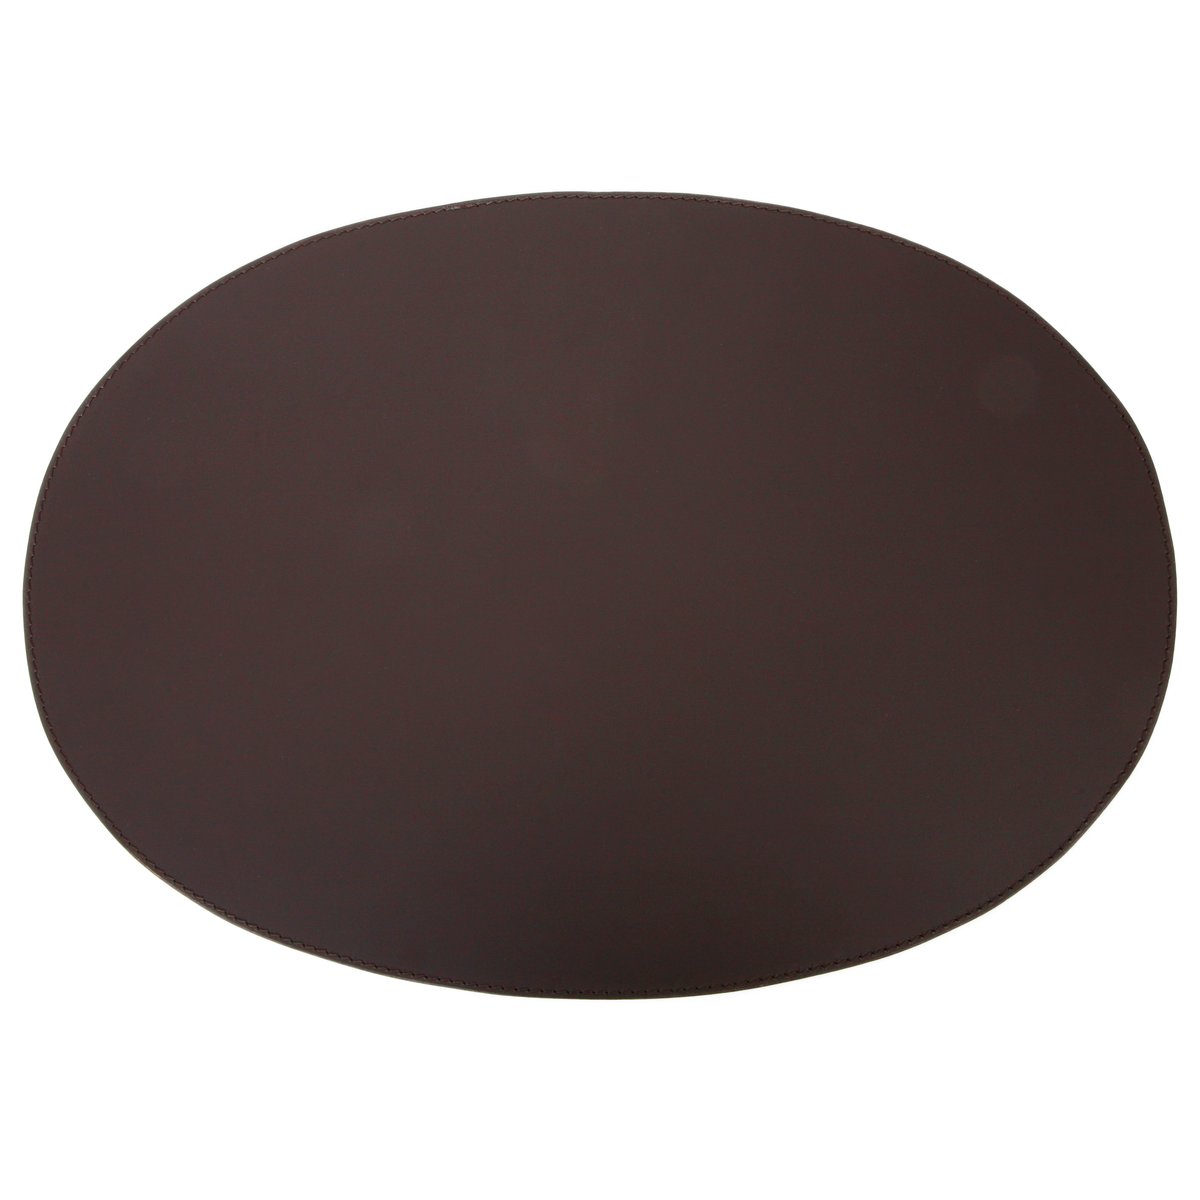 Ørskov Ørskov dækkeserviet læder oval 47×34 cm Chocolate